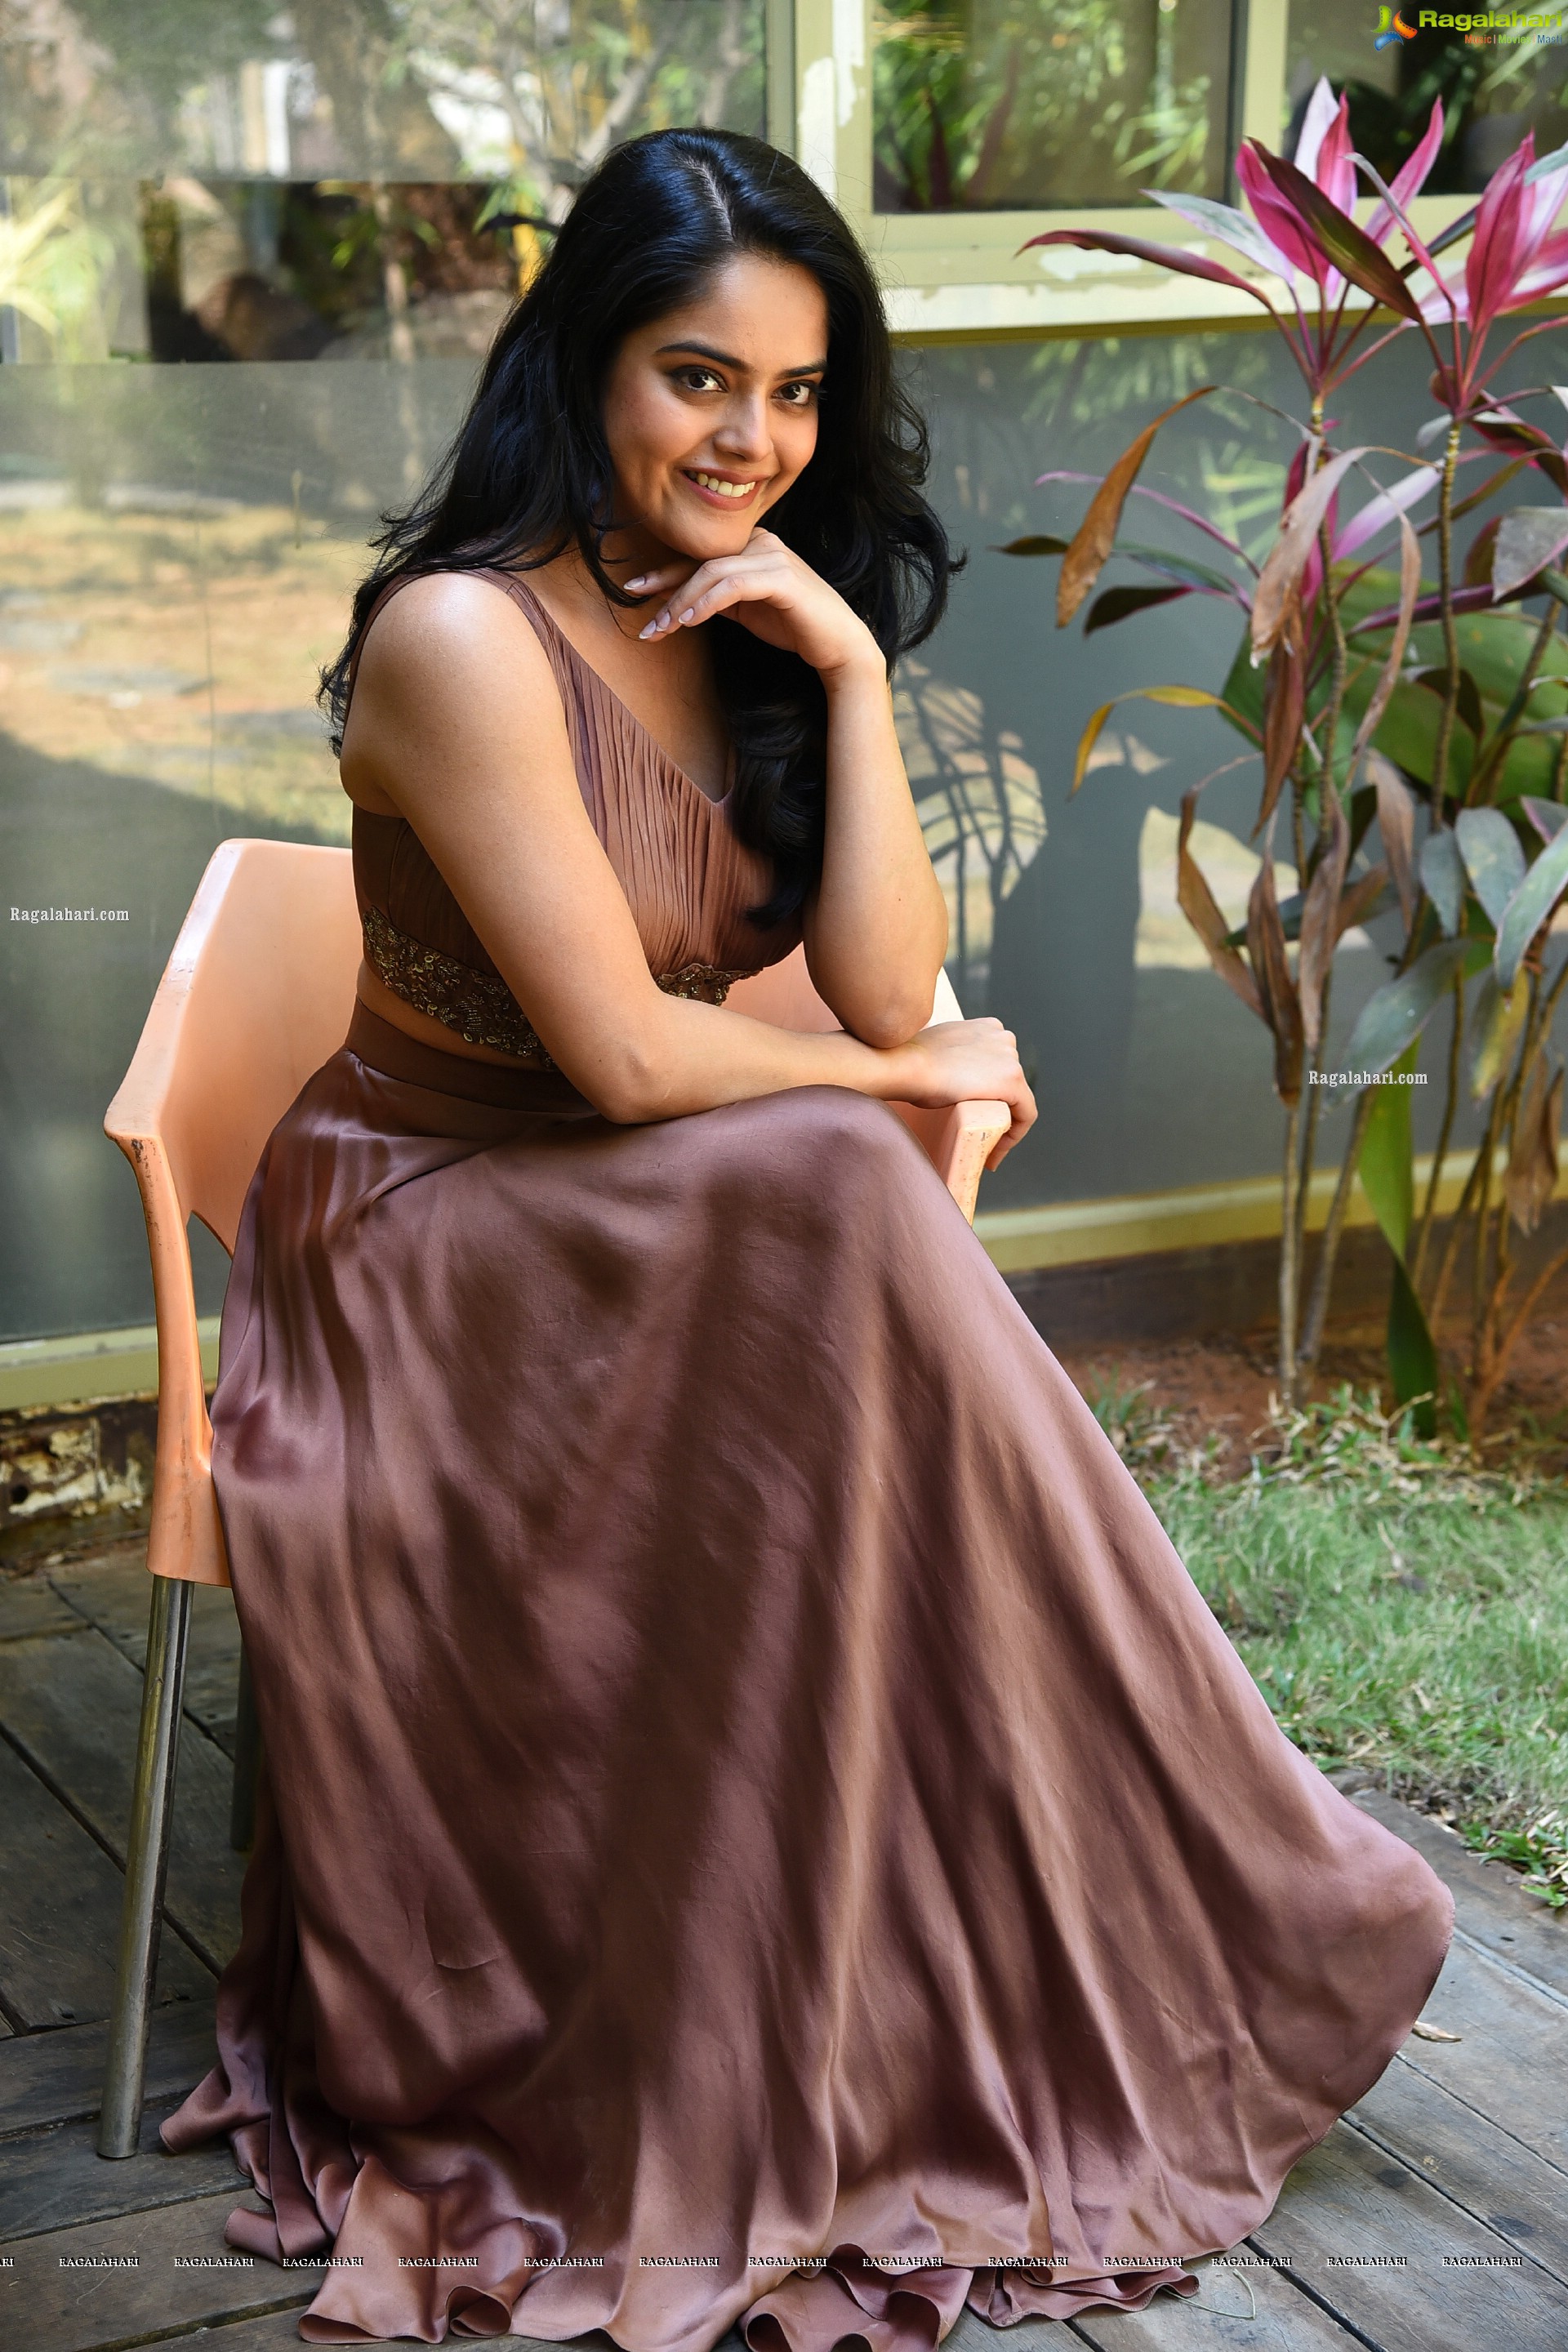 Riddhi kumar at Radhe Shyam Movie Interview, HD Photo Gallery